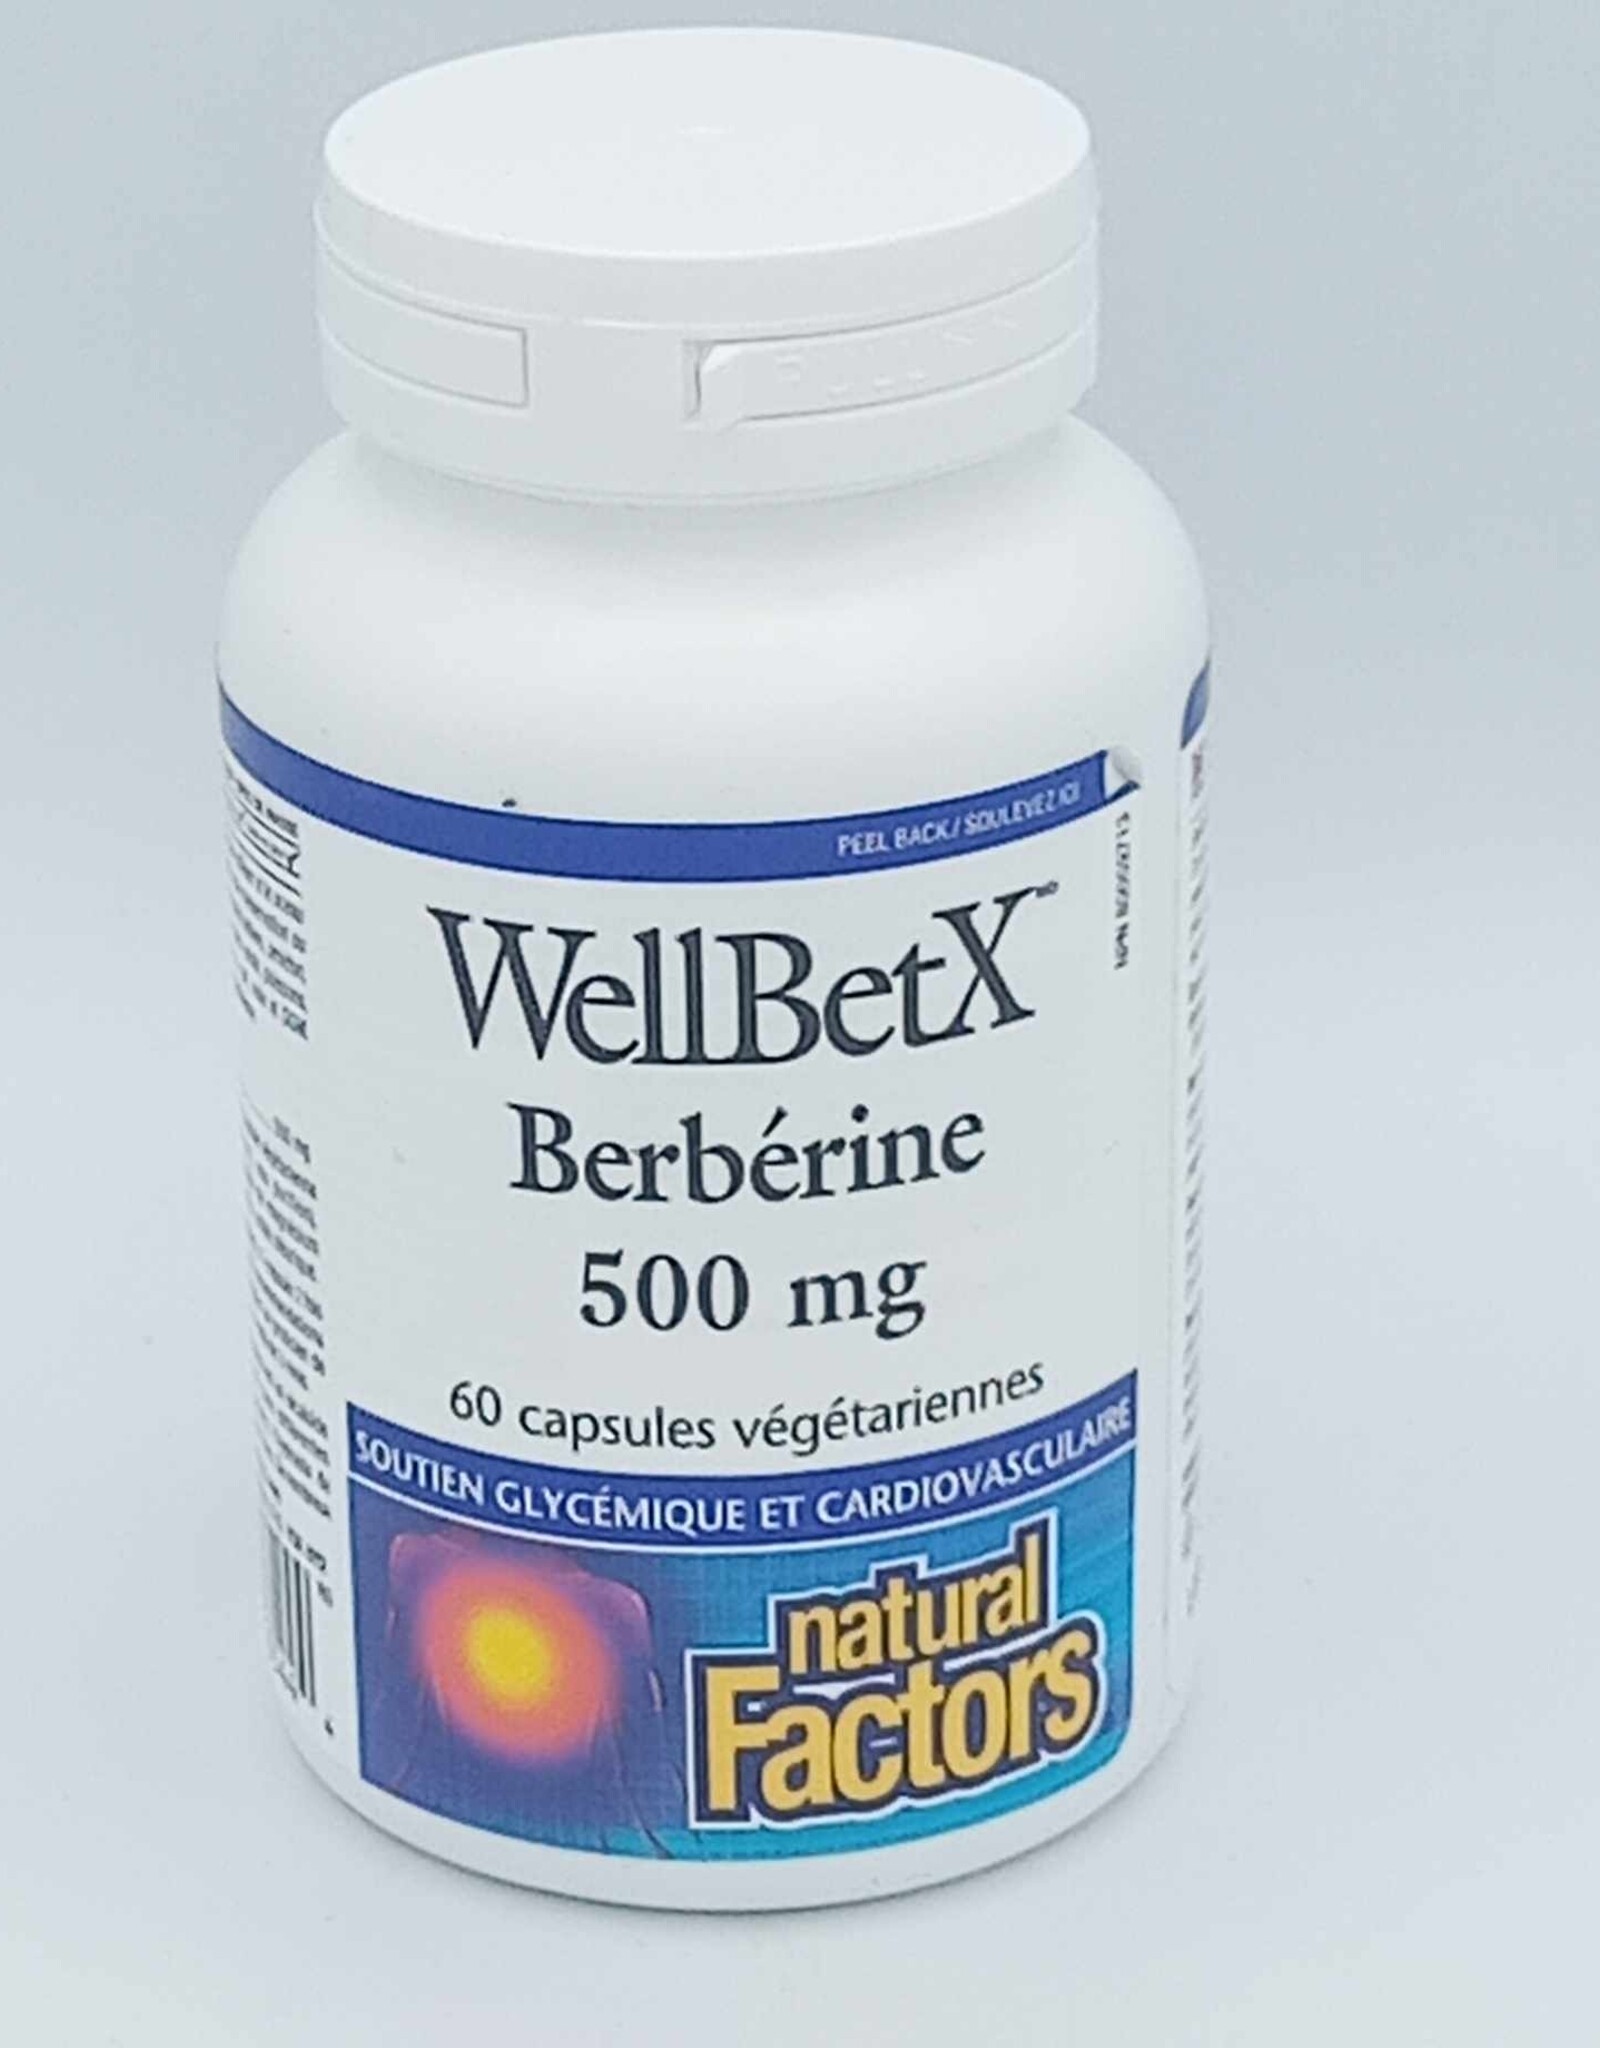 Natural Factor Natural Factor - Wellbetx, Berbérine 500mg (60cap)